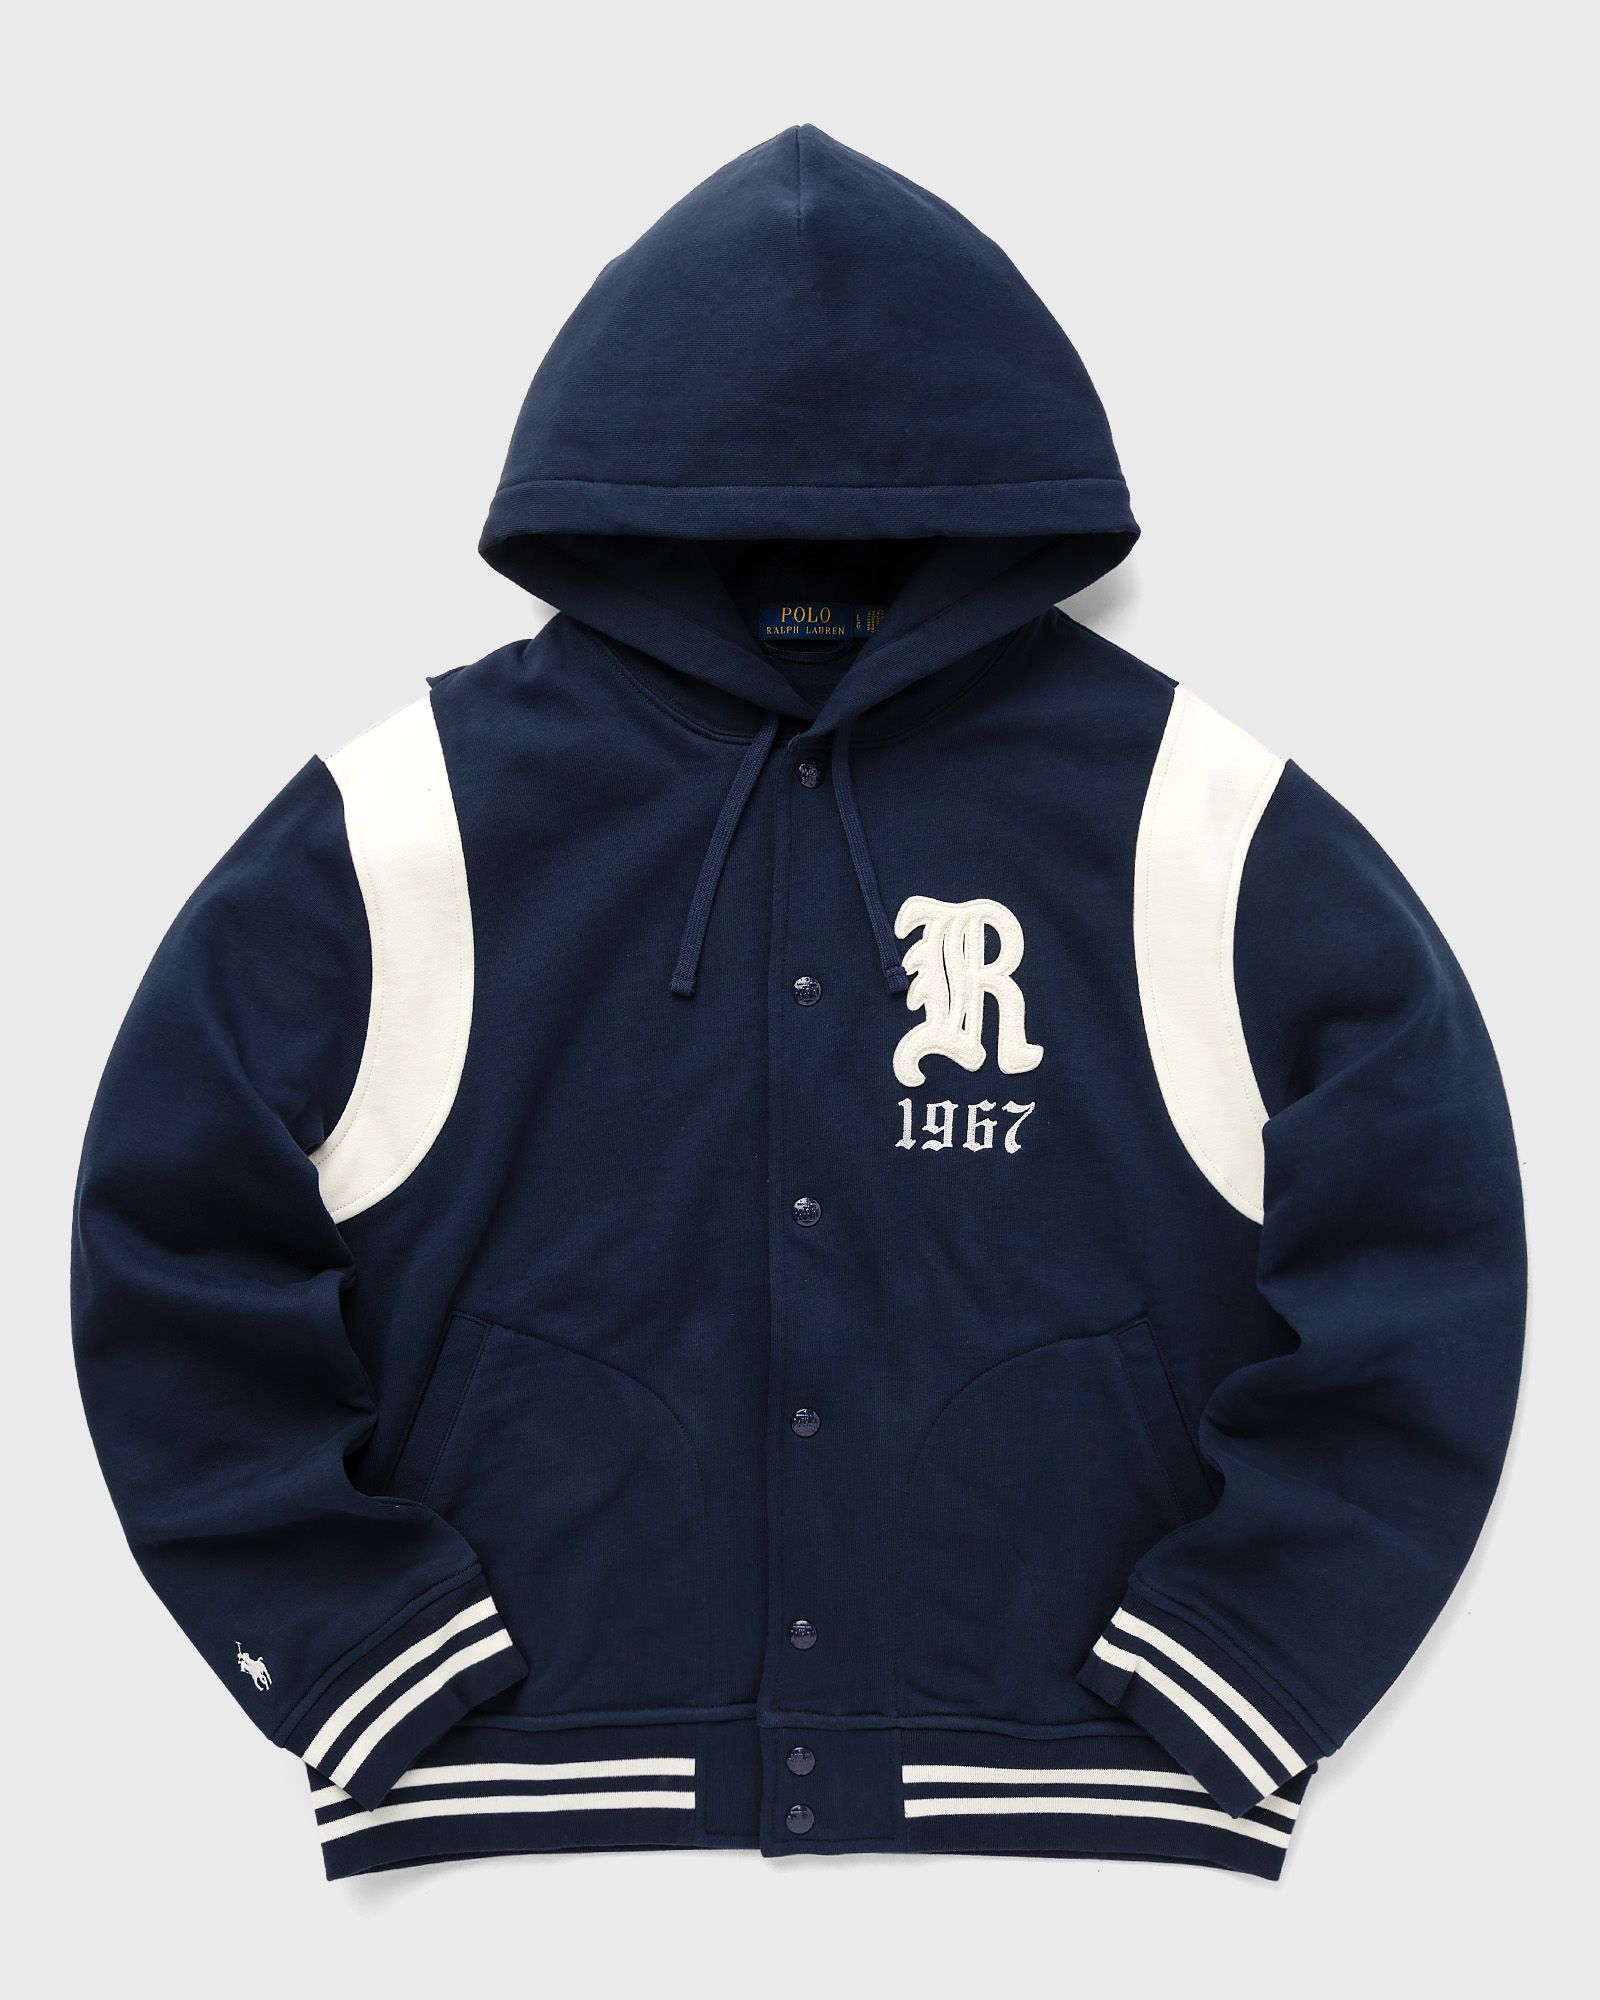 Polo Ralph Lauren - baseblhoodm1-l/s hooded baseball jacket men college jackets|hoodies|zippers blue in größe:xl